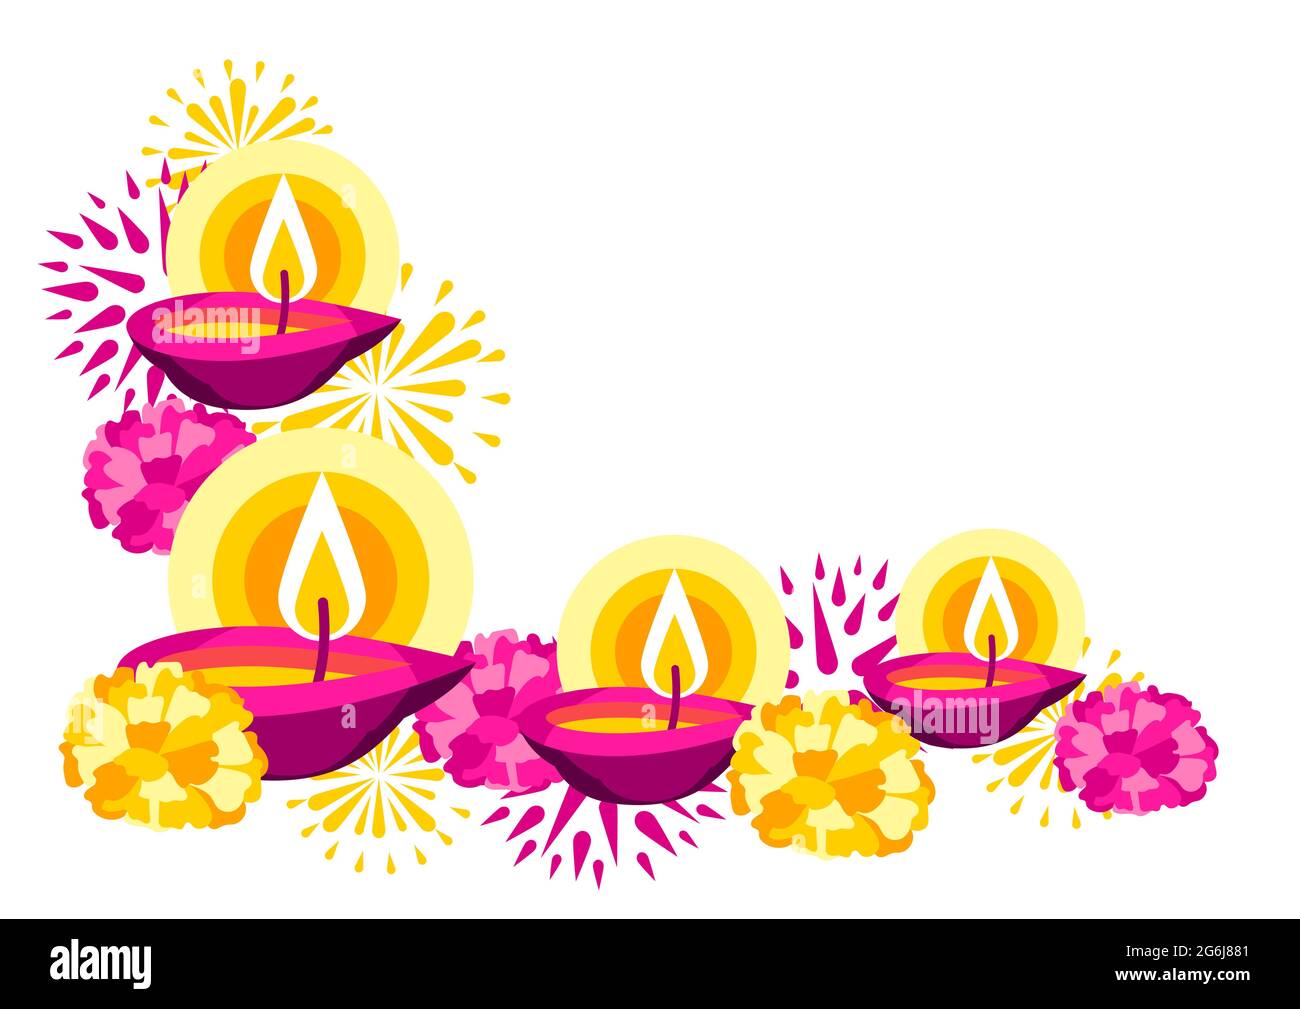 Happy Diwali greeting card. Deepavali or dipavali festival of ...